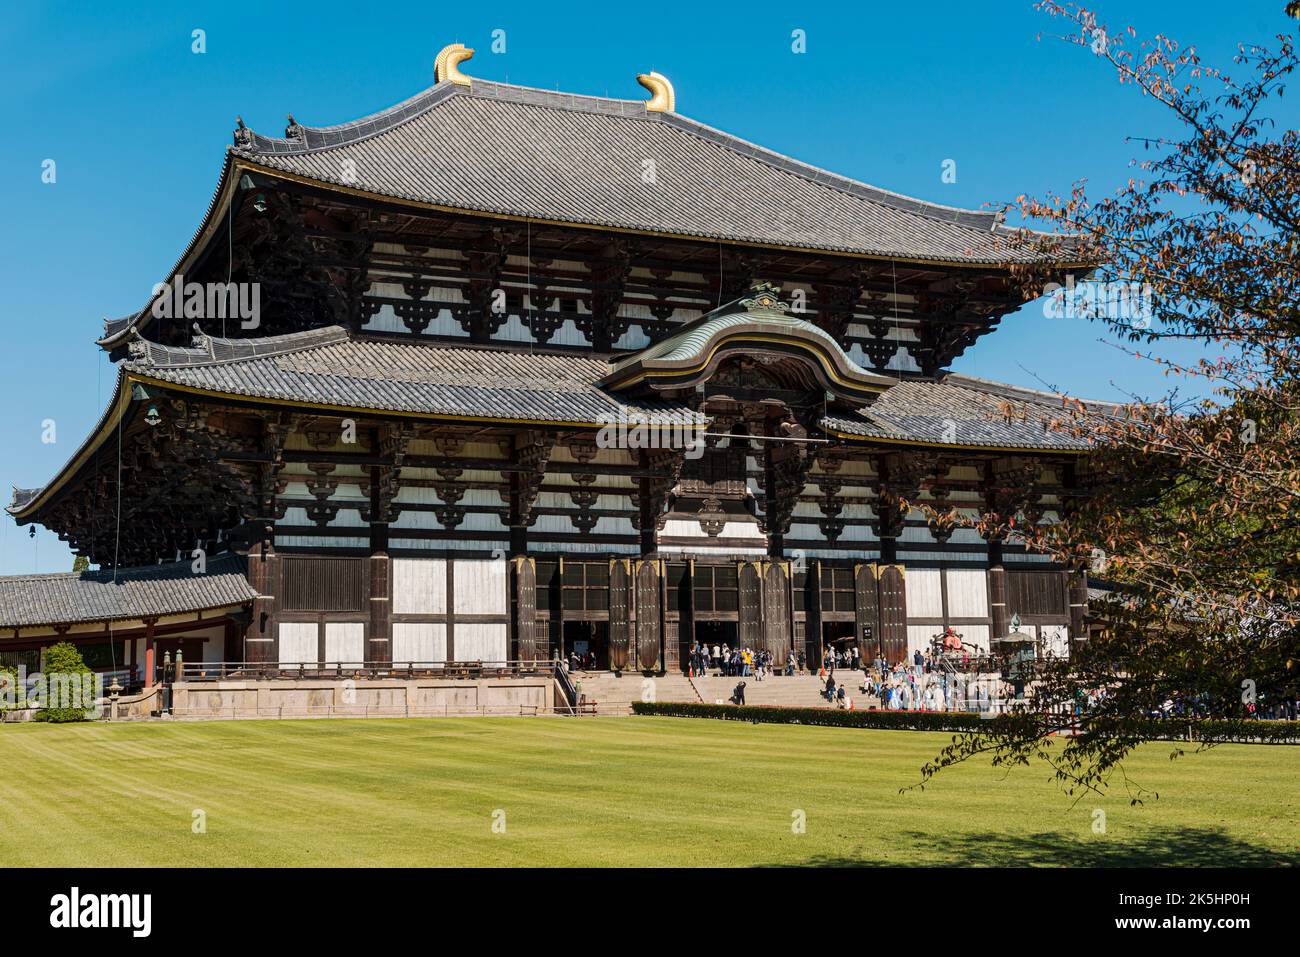 Le Grand Buddha Hall, temple Todai-ji, Nara, Japon Banque D'Images